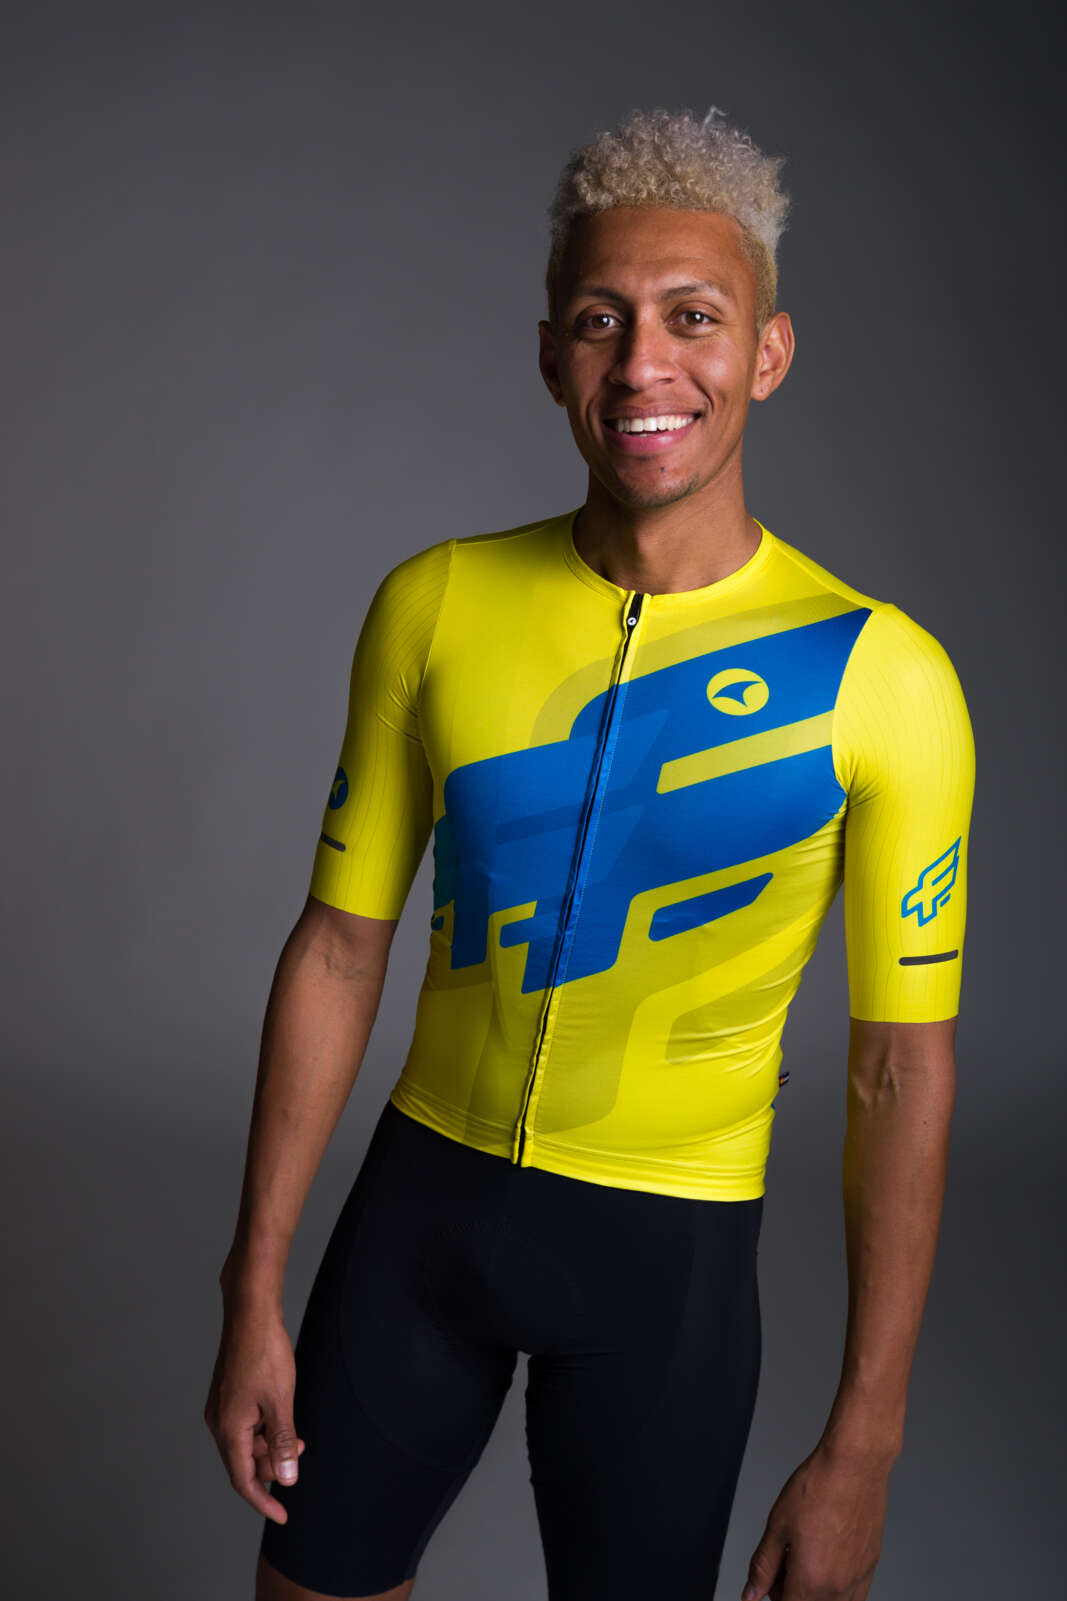 Men's Yellow Aero Cycling Jersey - Flyte Fun Front View